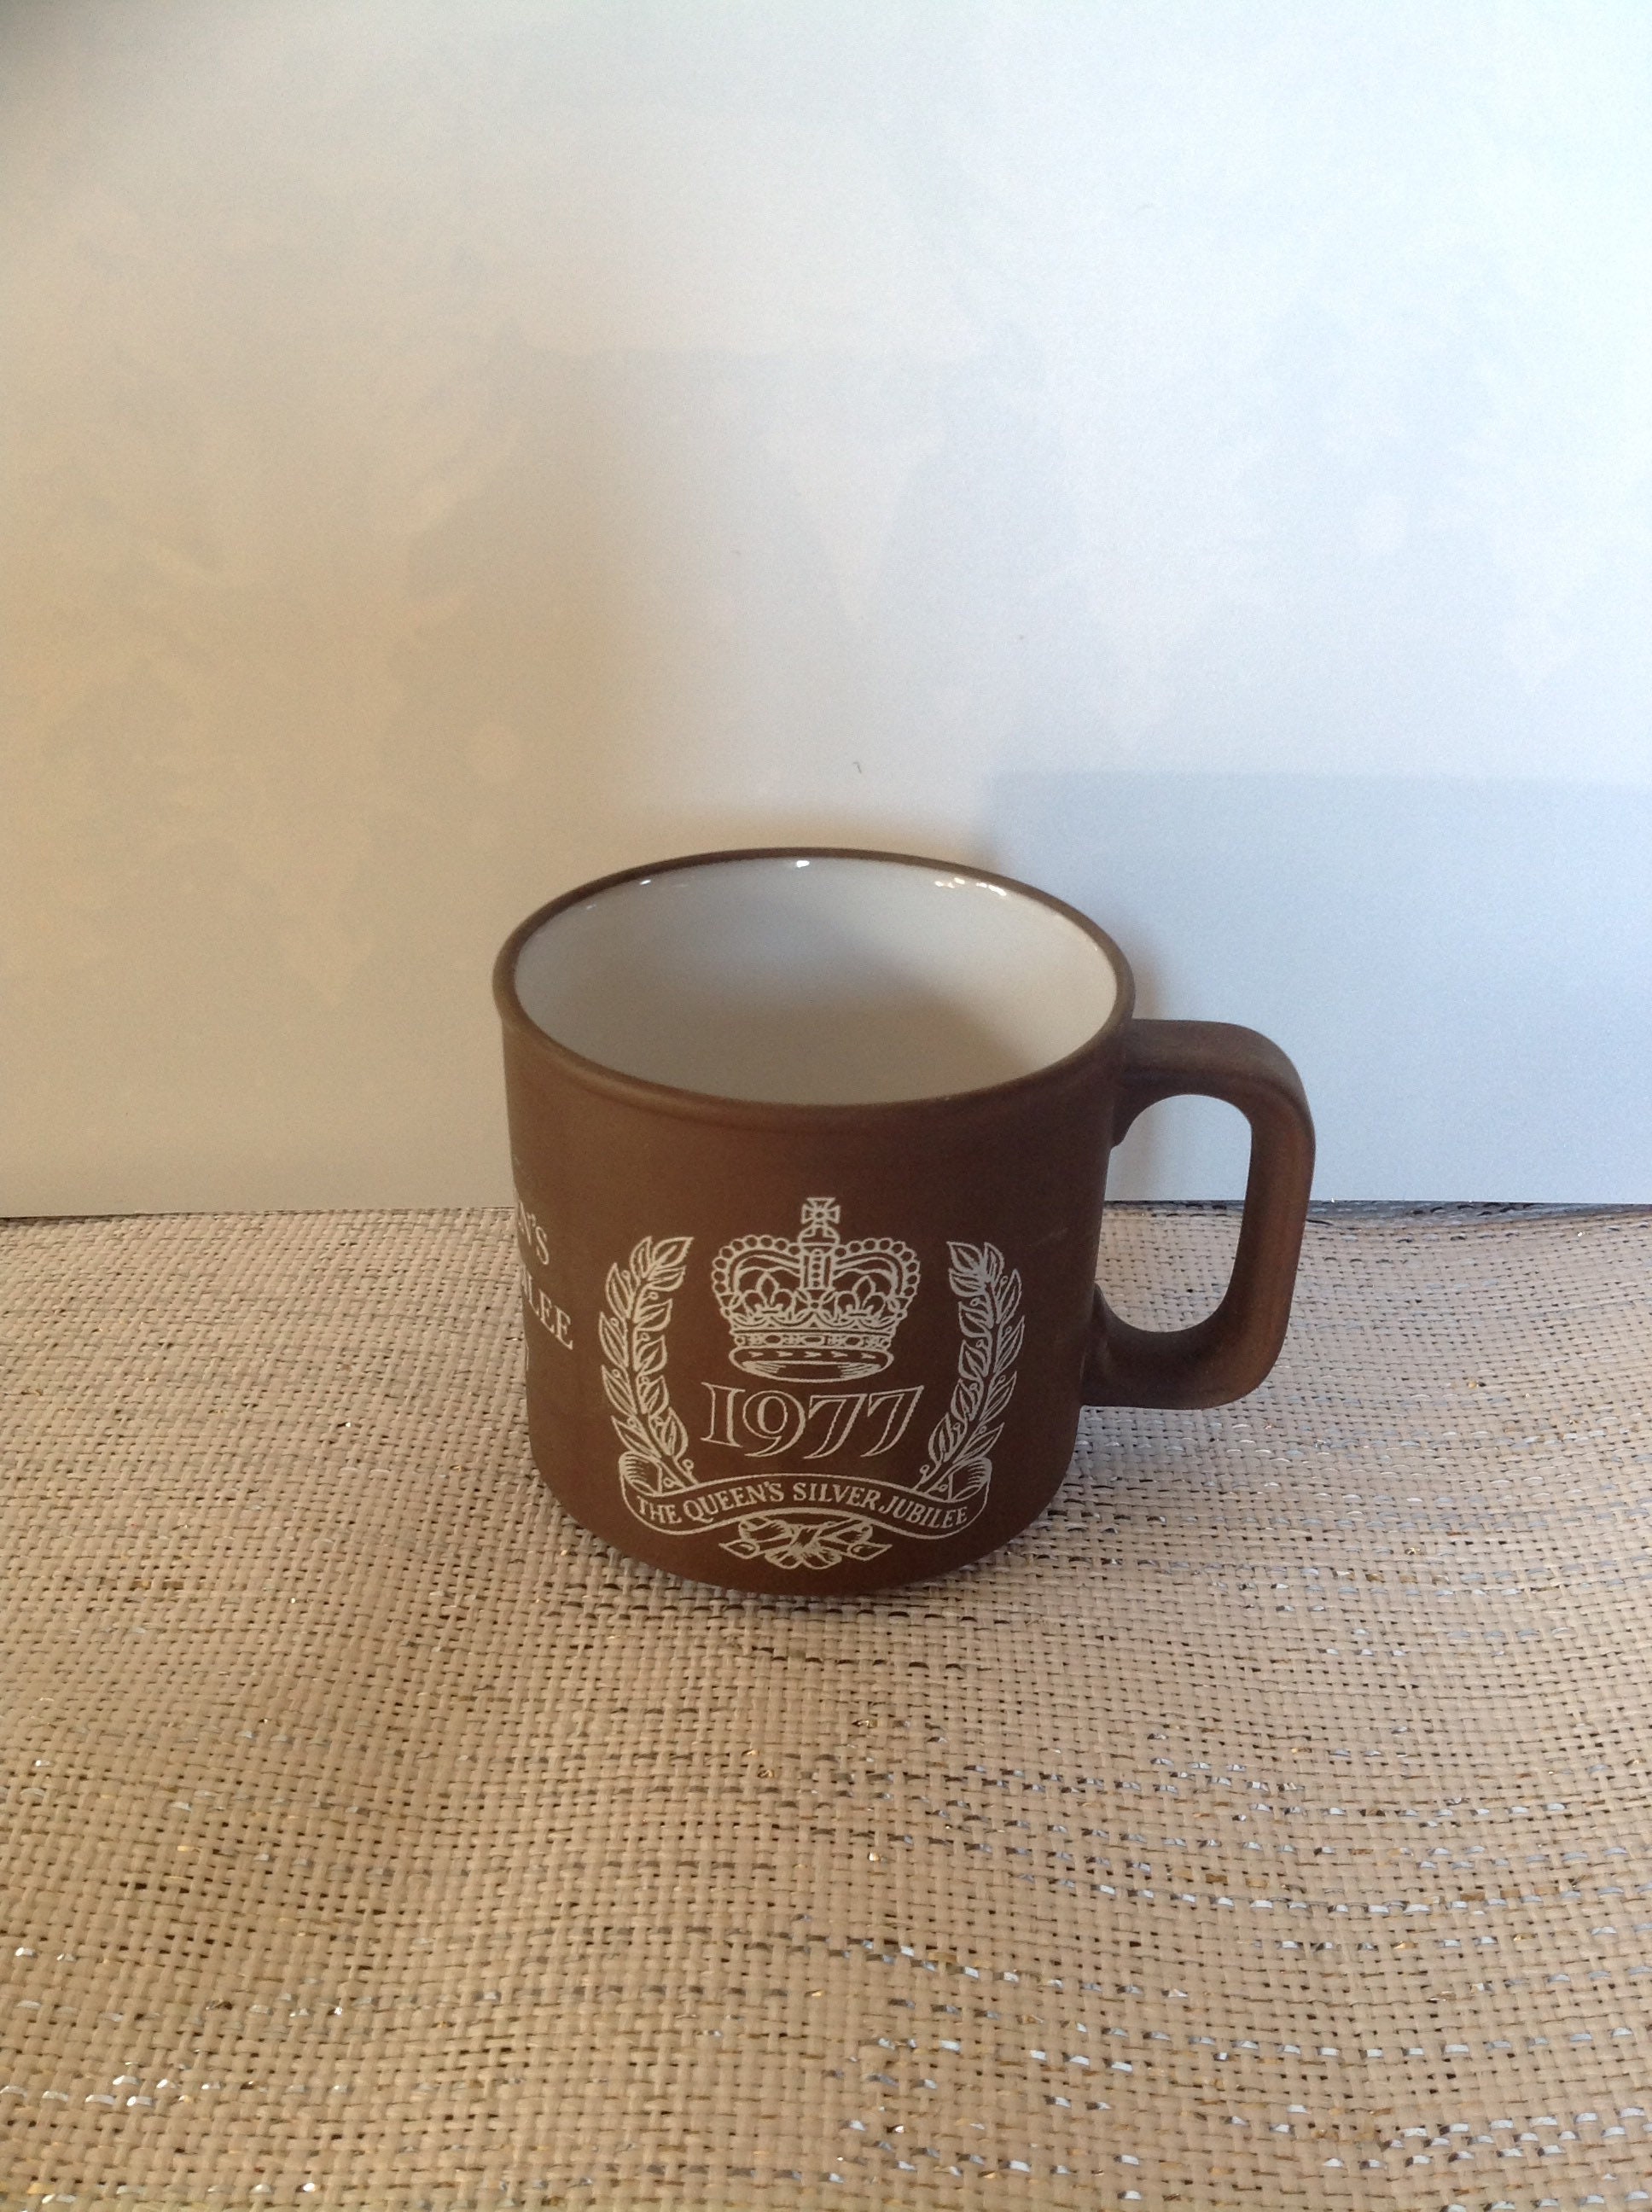 Vintage 1977 Hornsea Silver Jubilee Mug